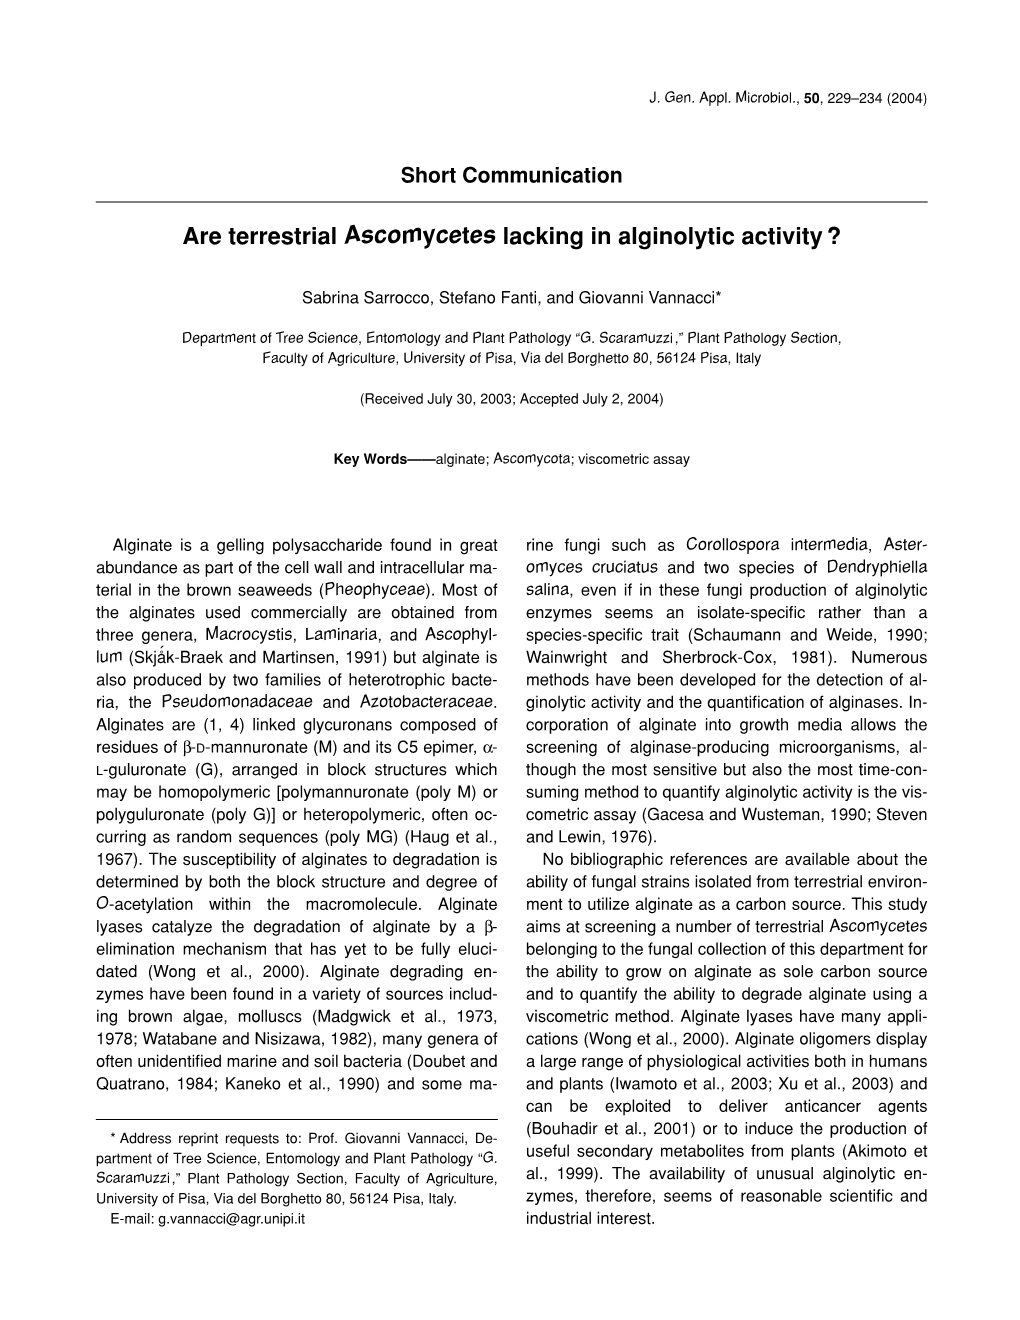 Are Terrestrial Ascomycetes Lacking in Alginolytic Activity?